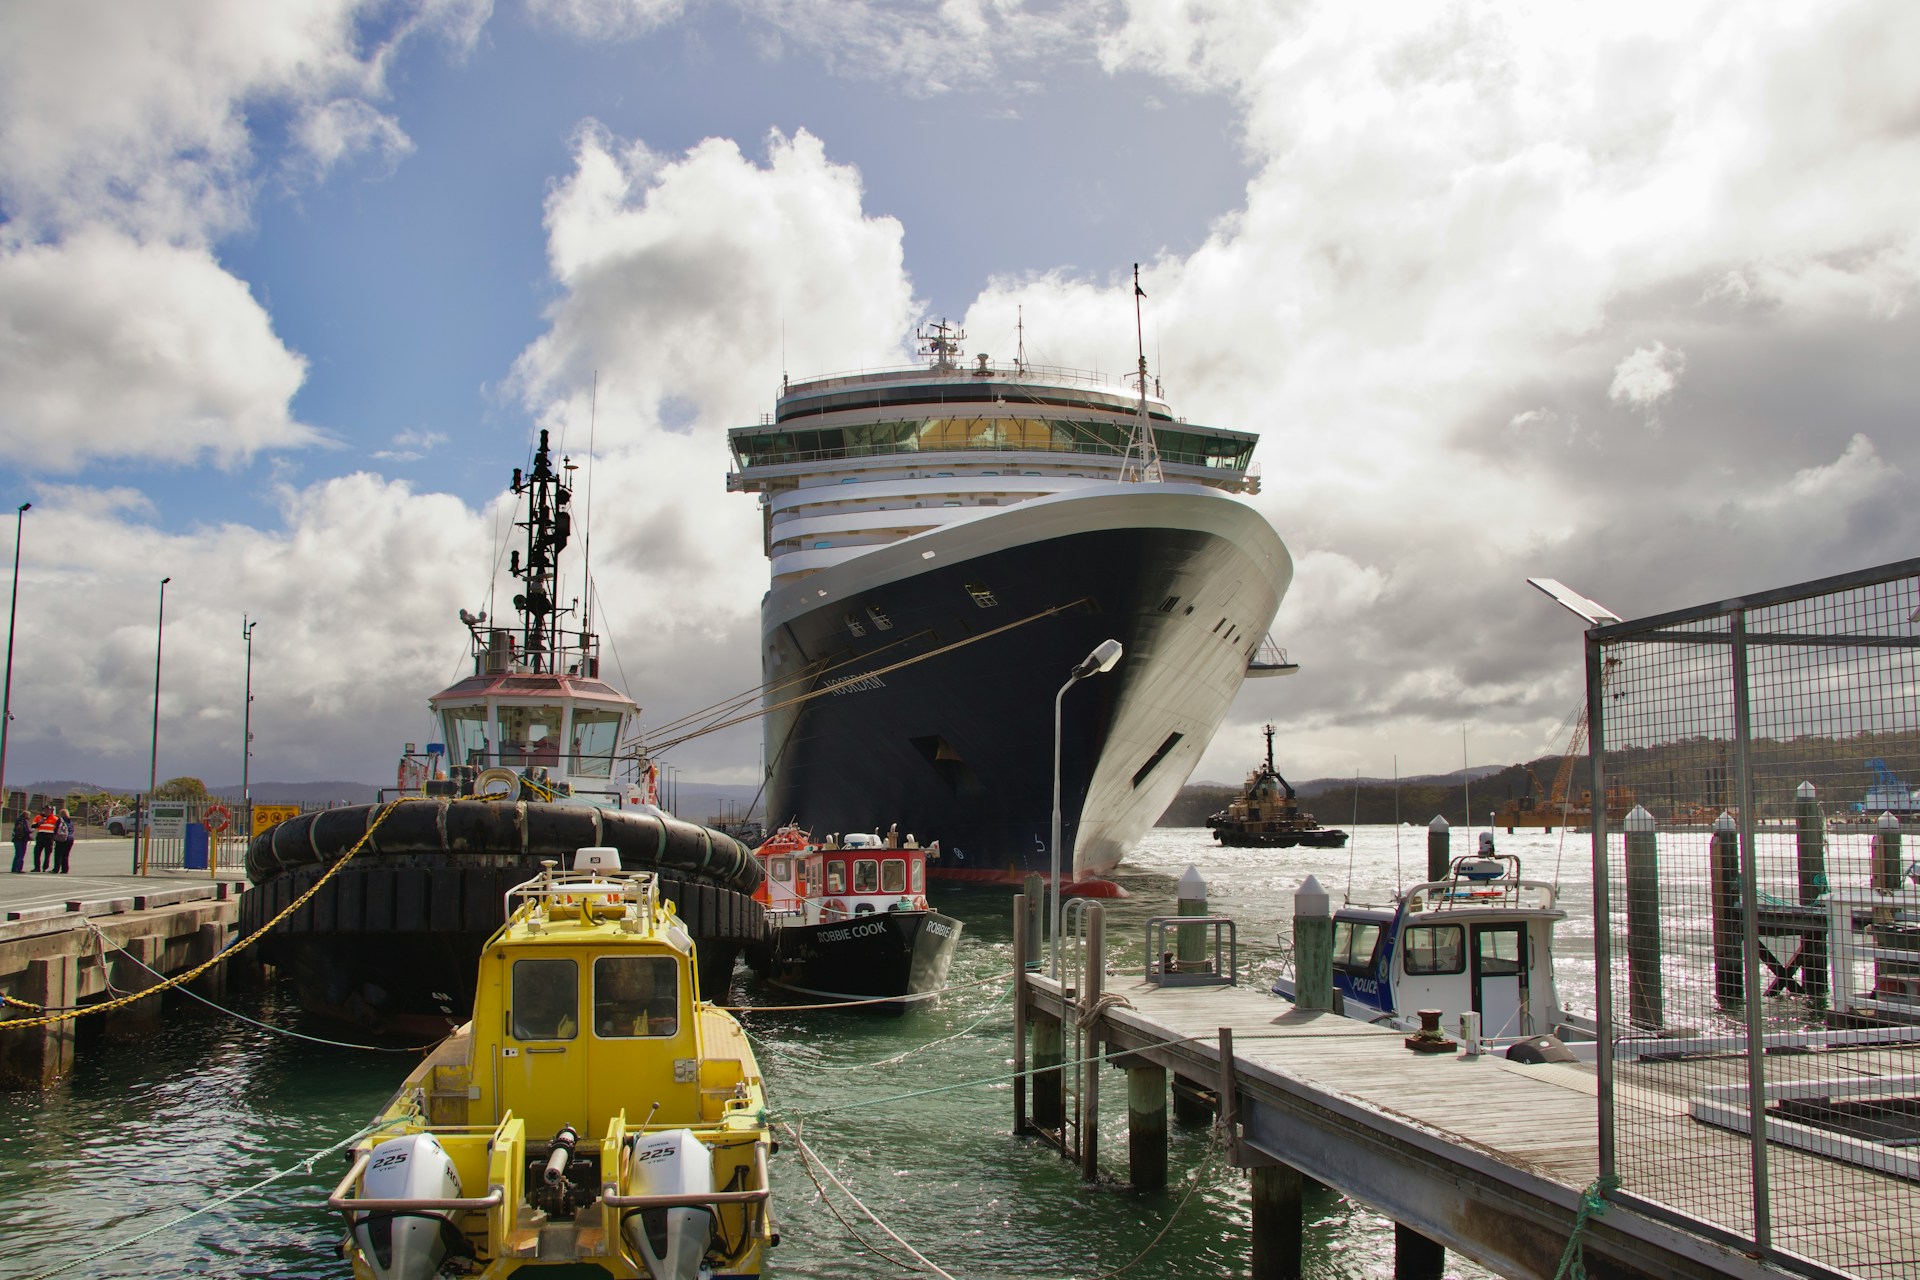 A cruise ship in the Port of Eden, Australia